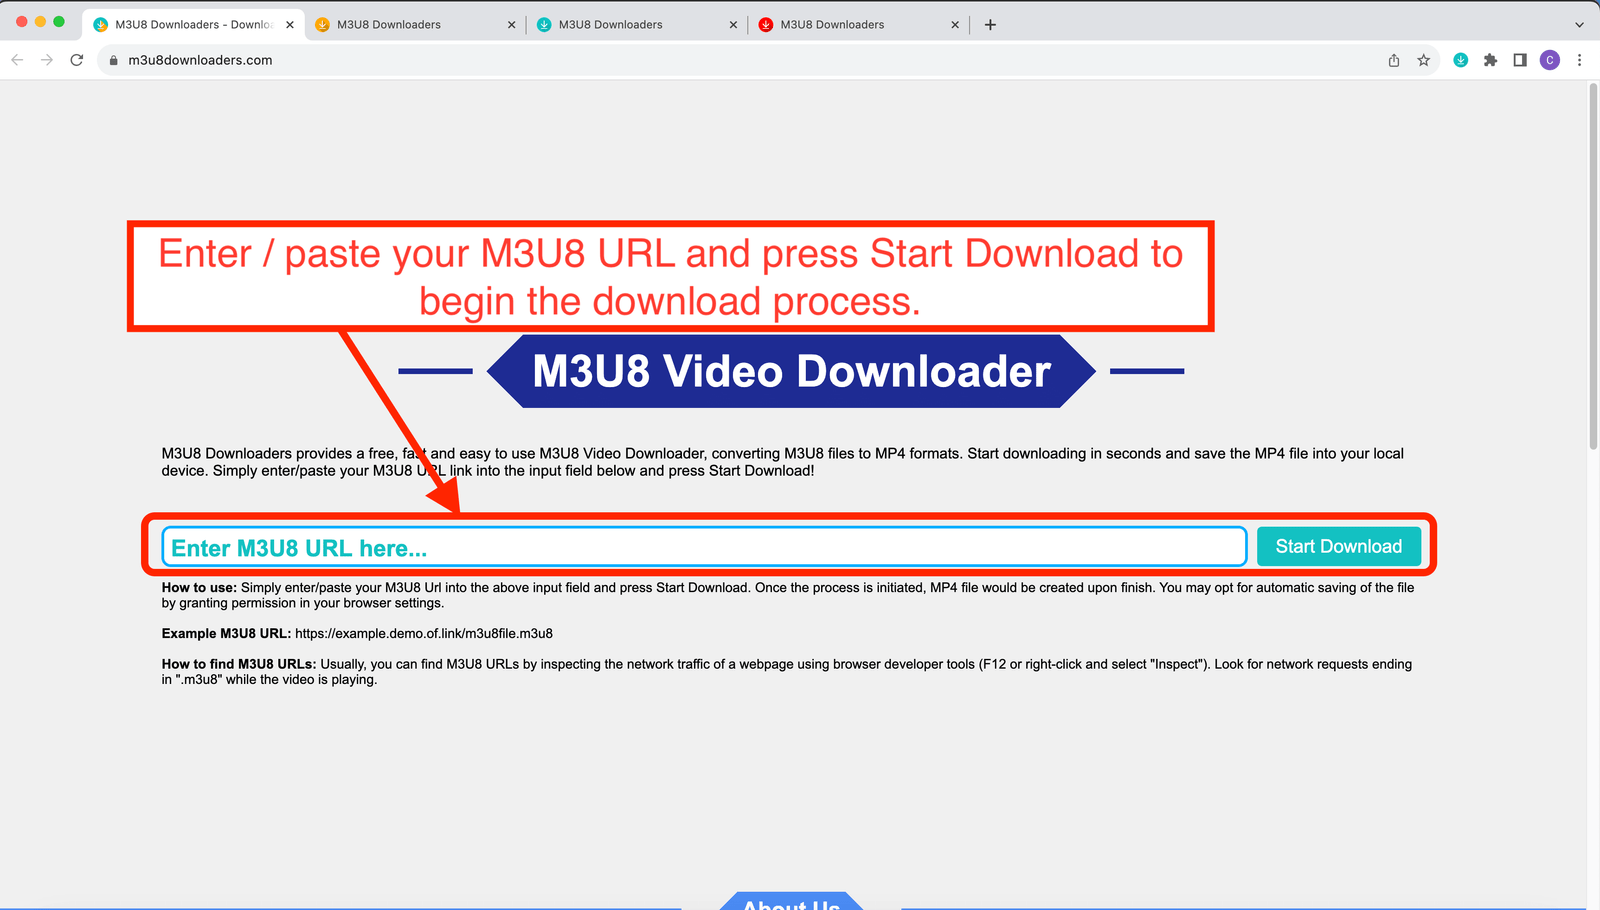 M3U8 Video Downloader - Enter M3U8 URL